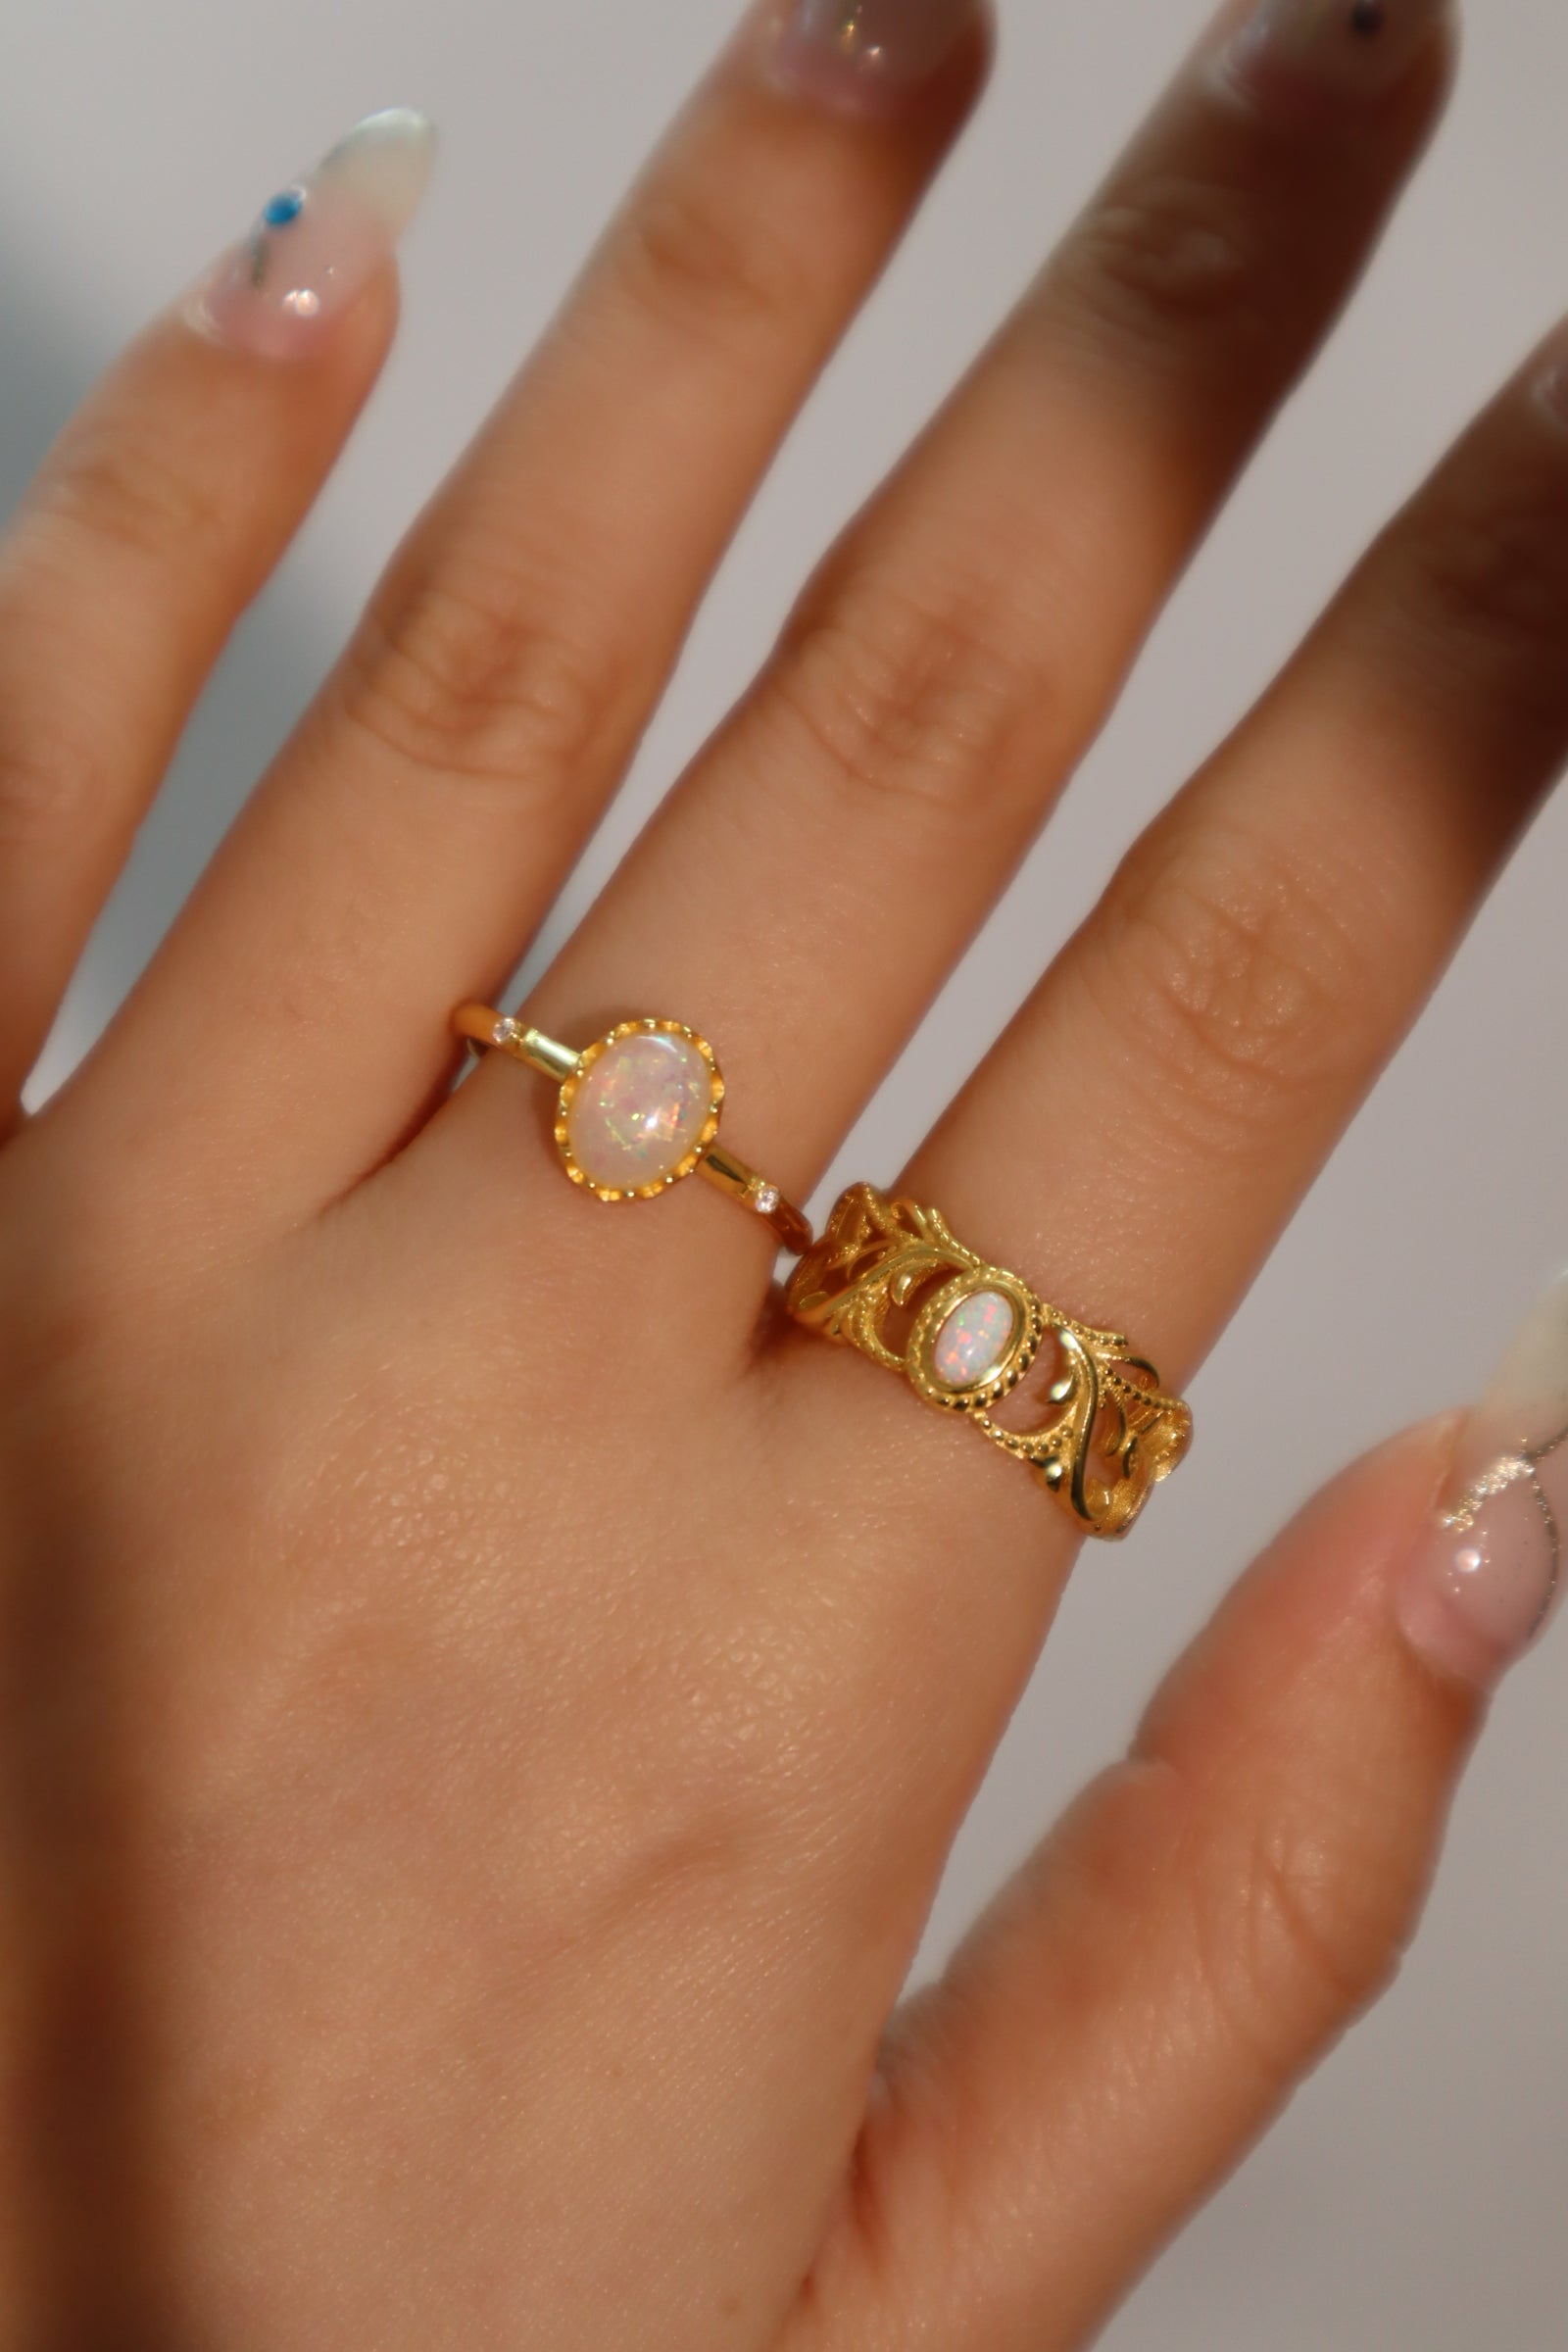 Cute Female White Opal Stone Ring Vintage Black Gold Wedding Rings For  Women Promise Love Heart Engagement Ring From Haydena, $22.1 | DHgate.Com